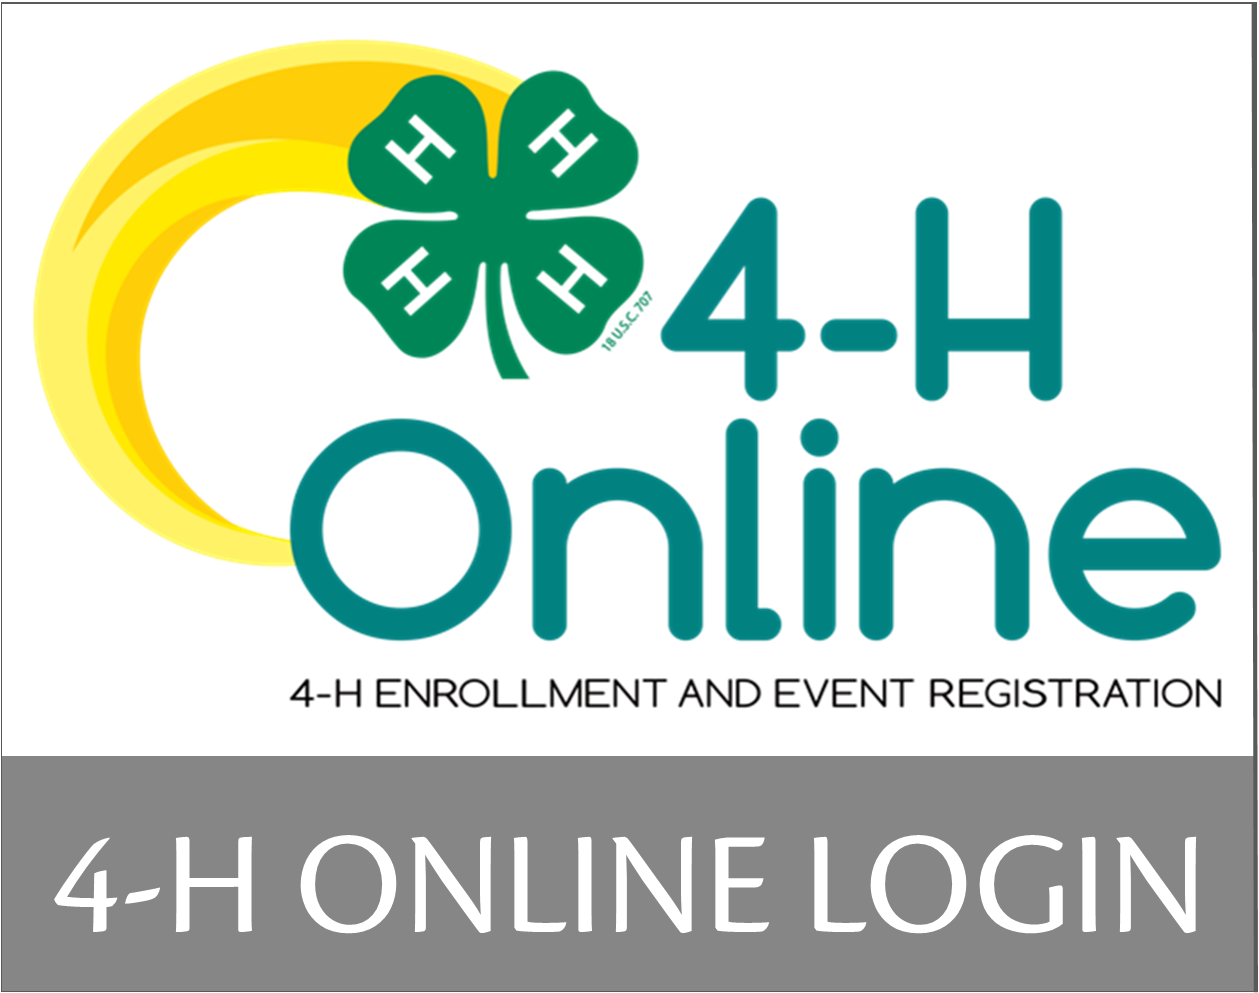 4-H Online Login button that links to the 4-H Online Enrollment website